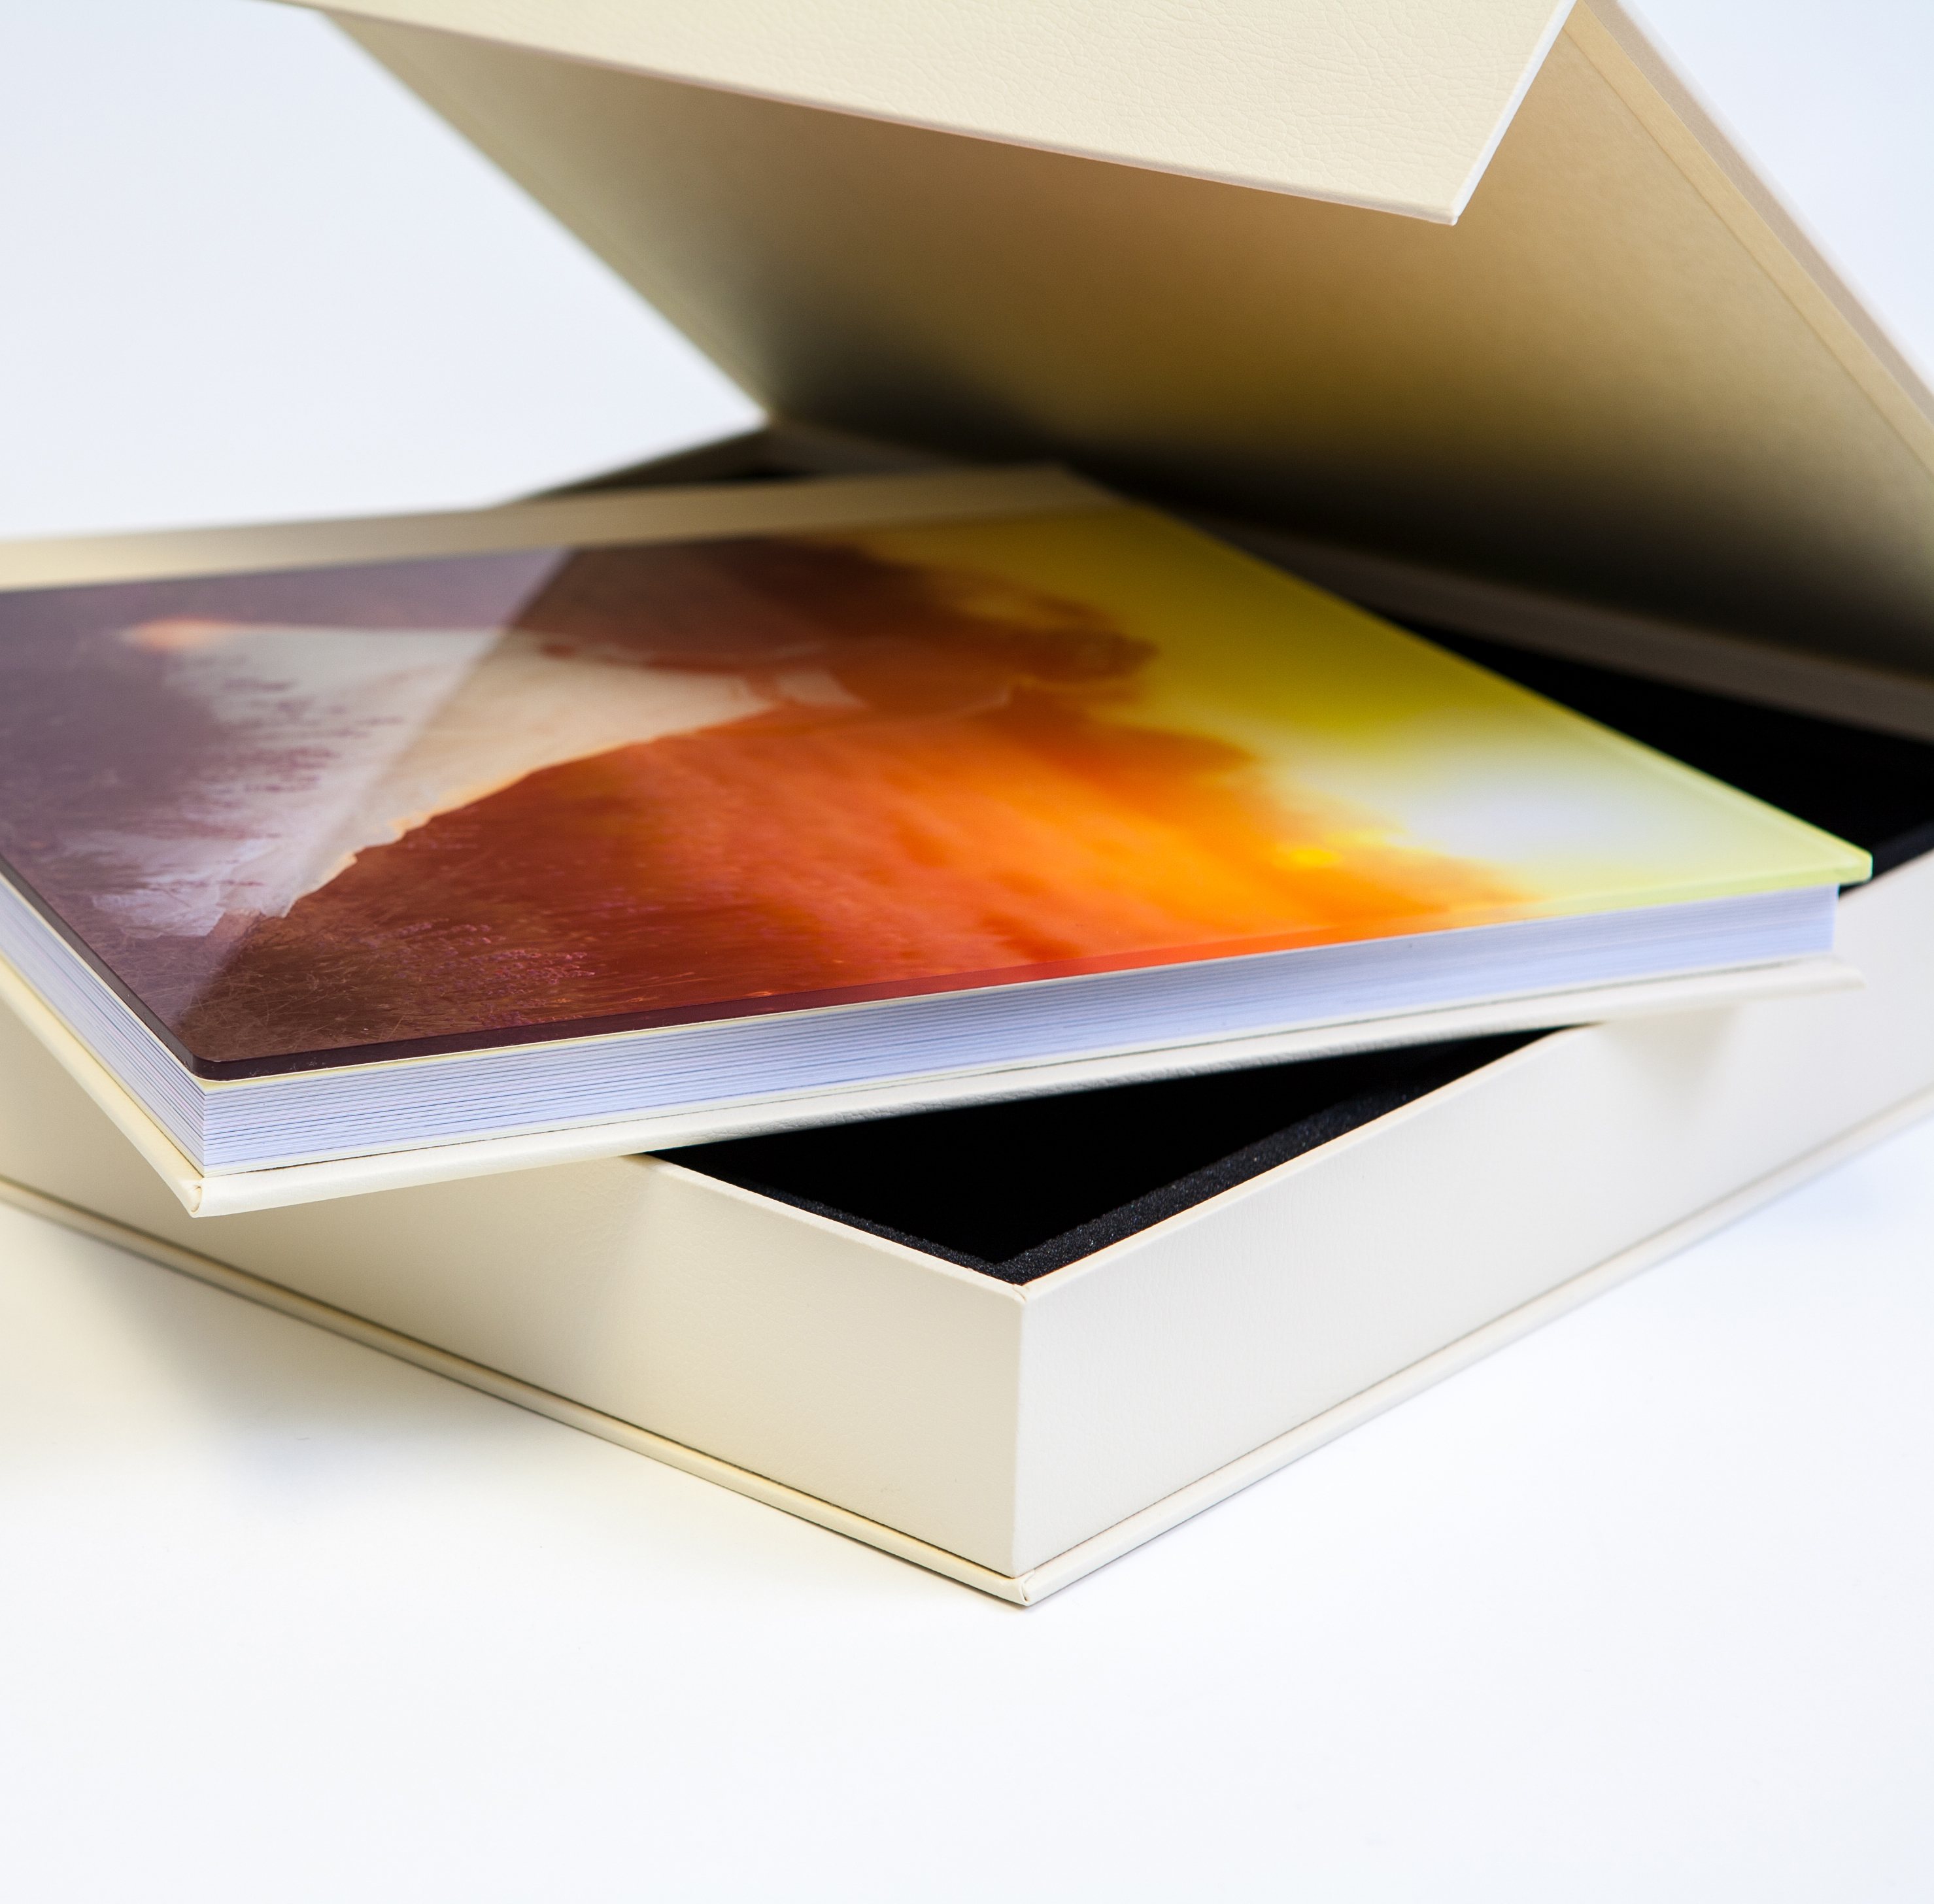 Glass photo album laying on presentation box